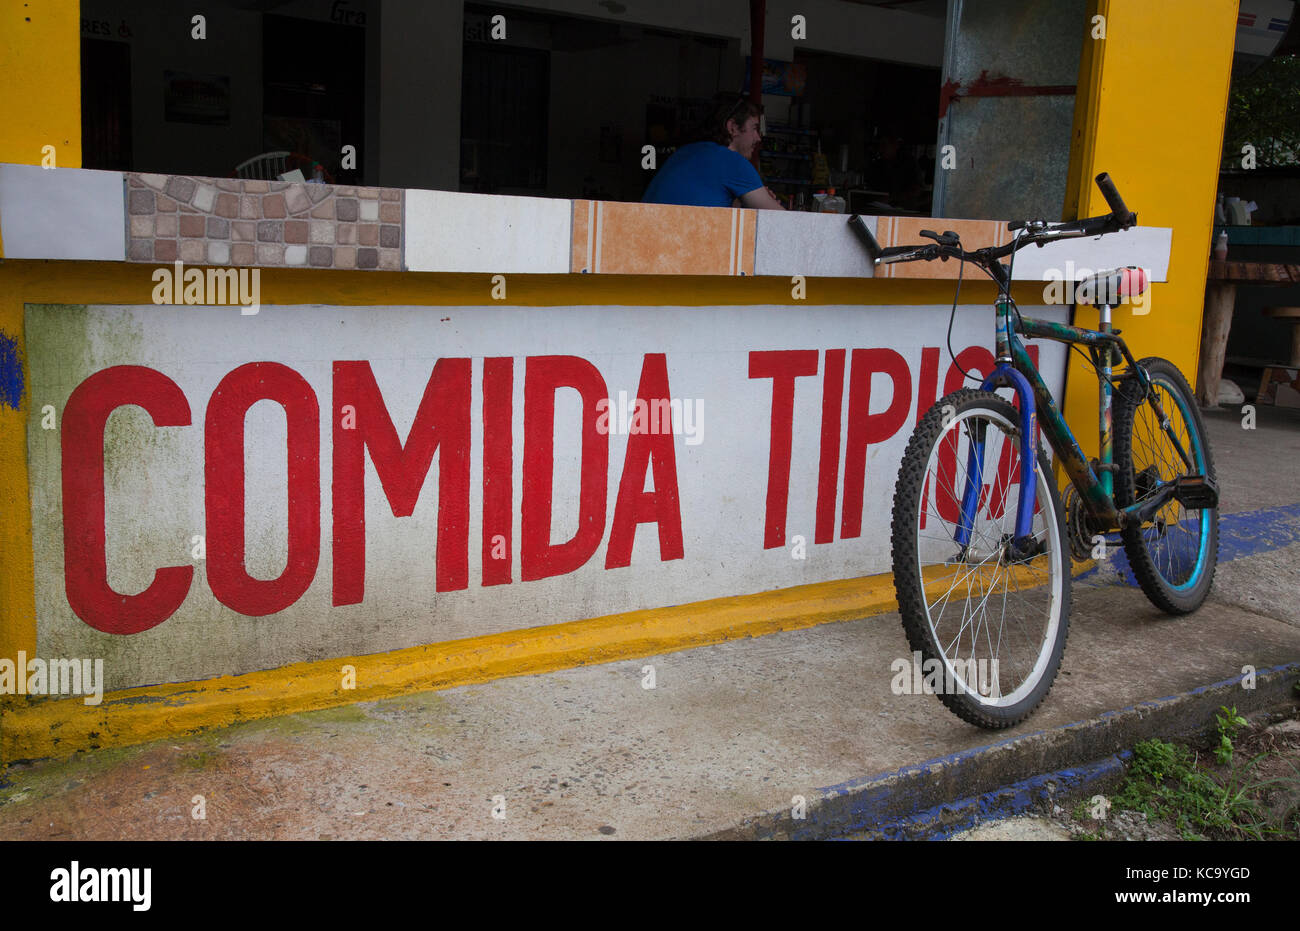 Comida Tipica at a Soda store market in Costa Rica Stock Photo